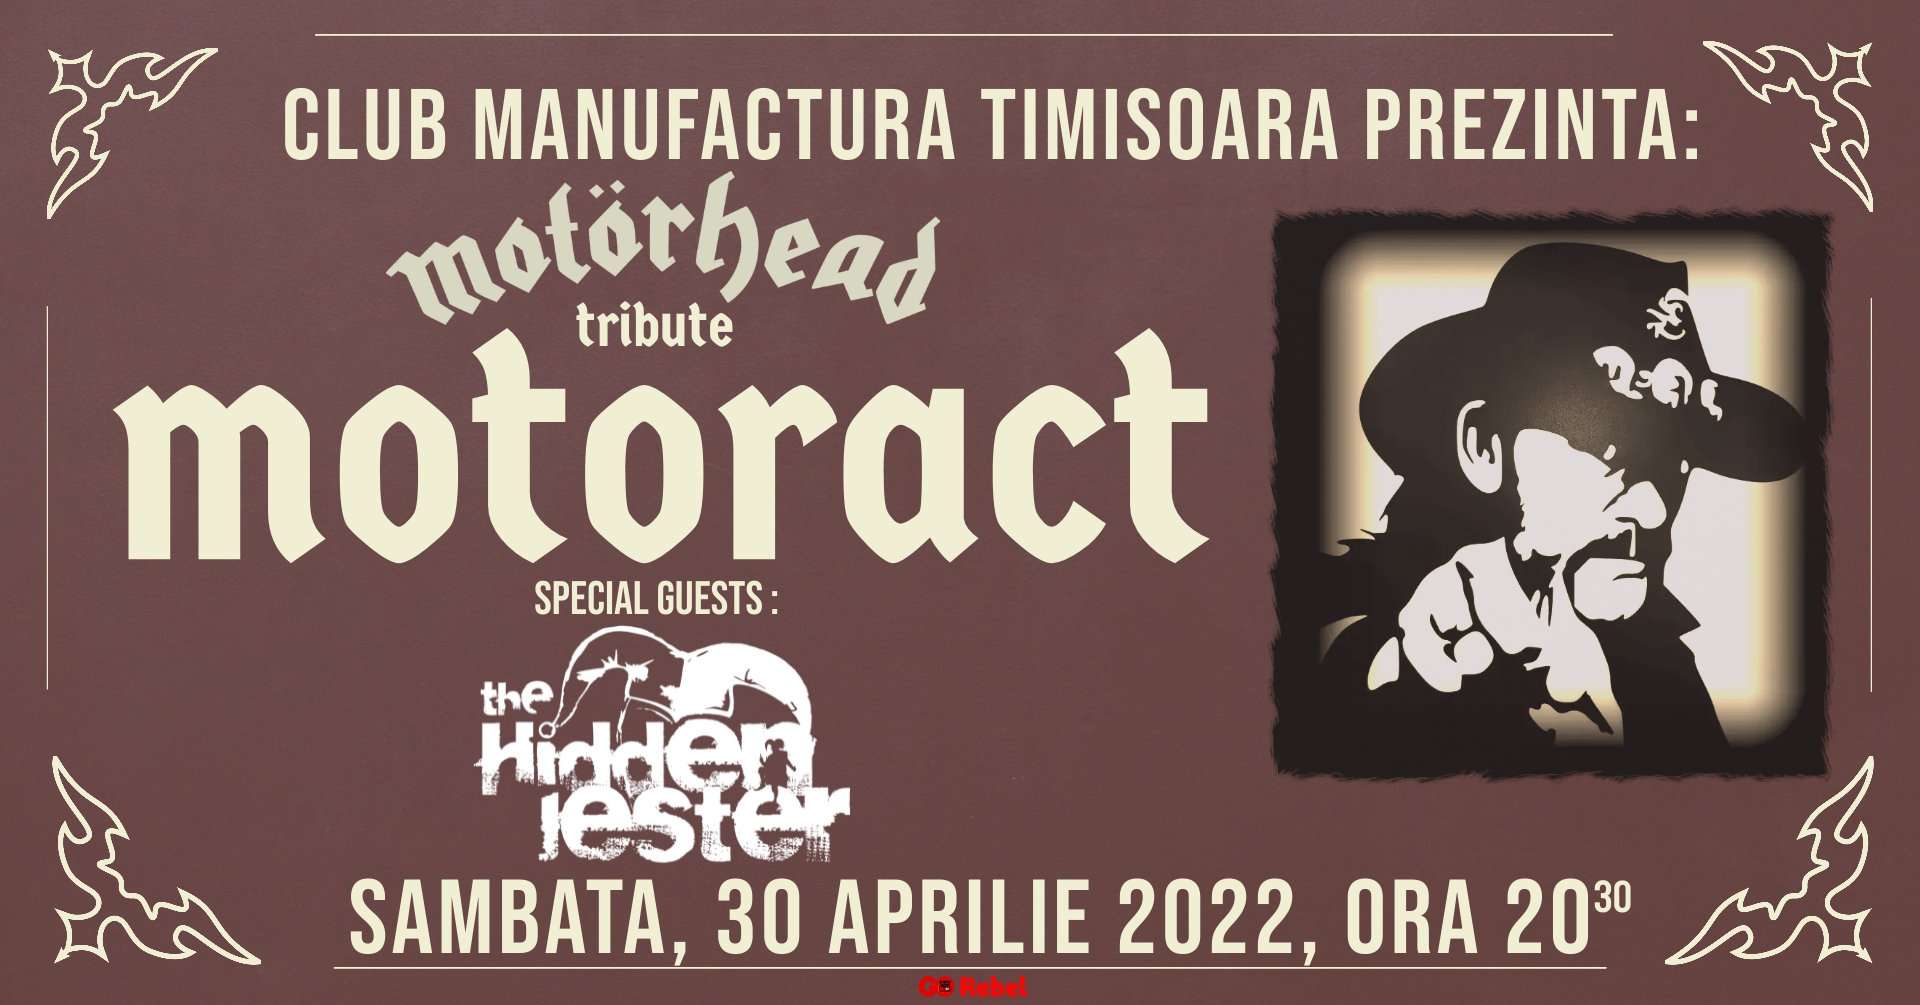 Motorhead tribute în Manufactura, LIVE cu trupa Motoract